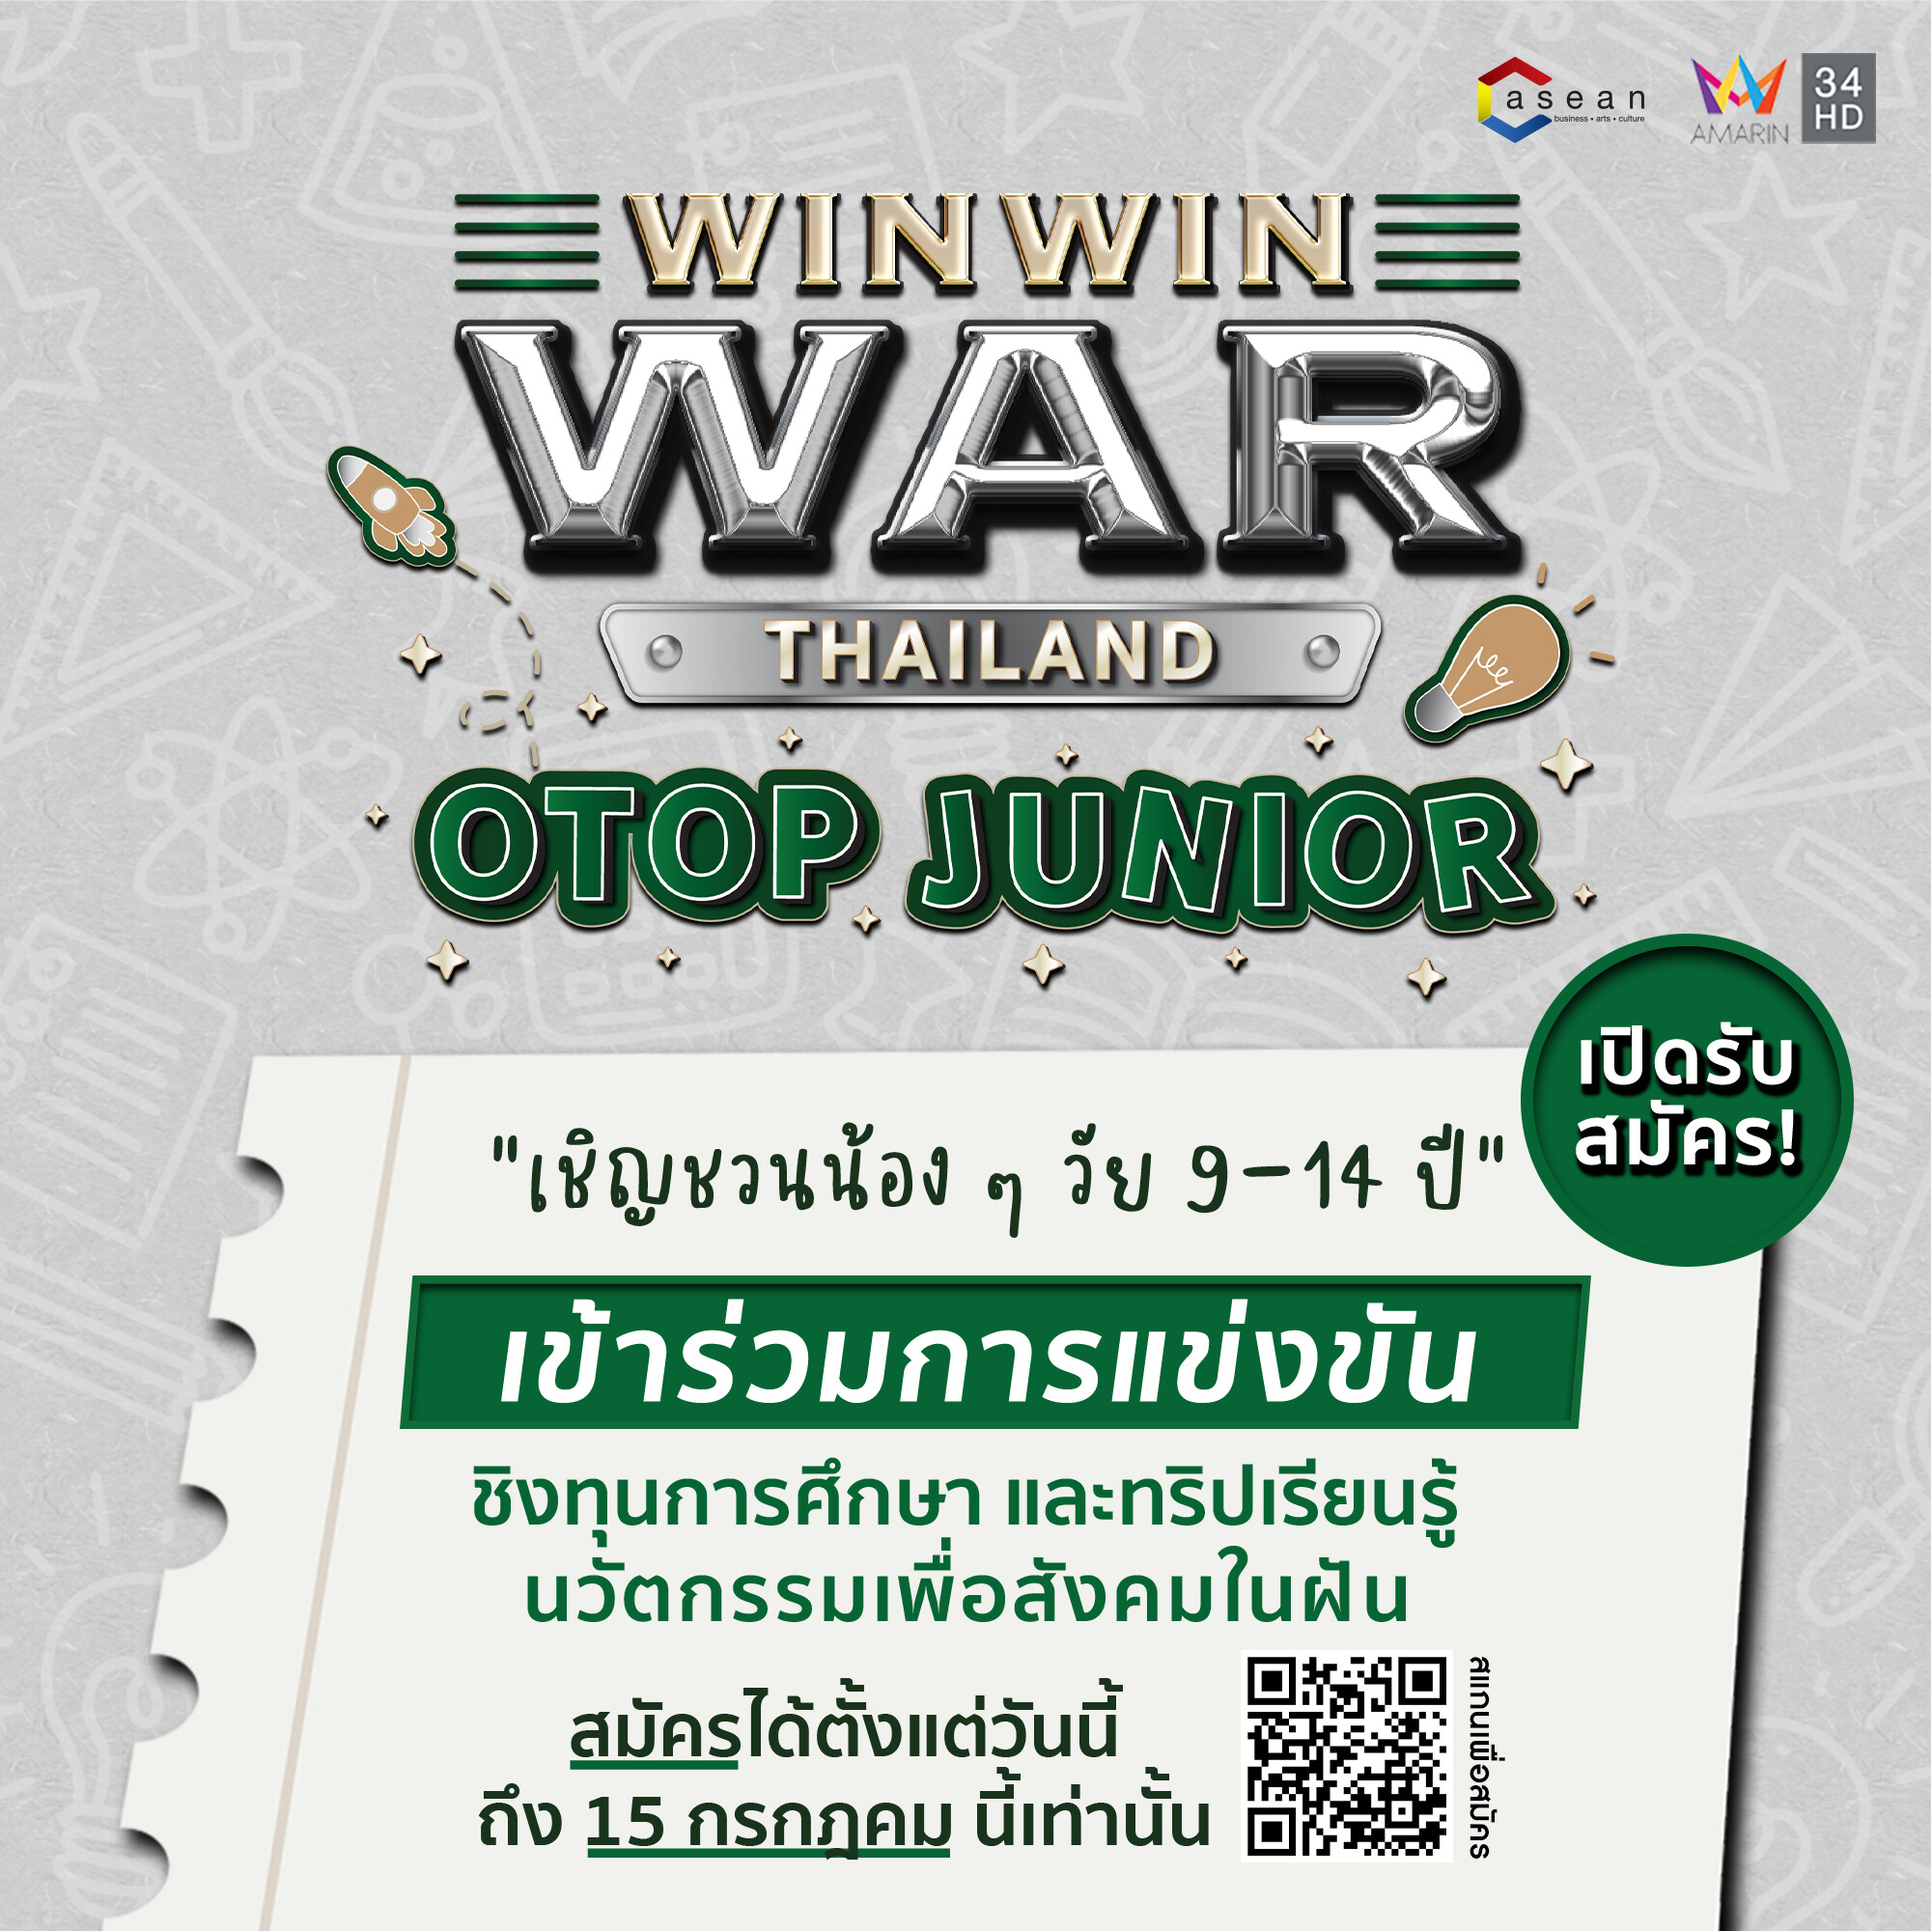 "Win Win WAR OTOP Junior" เฟ้นหาสุดยอดผลิตภัณฑ์ที่เอื้อประโยชน์กับสังคมและสิ่งแวดล้อม